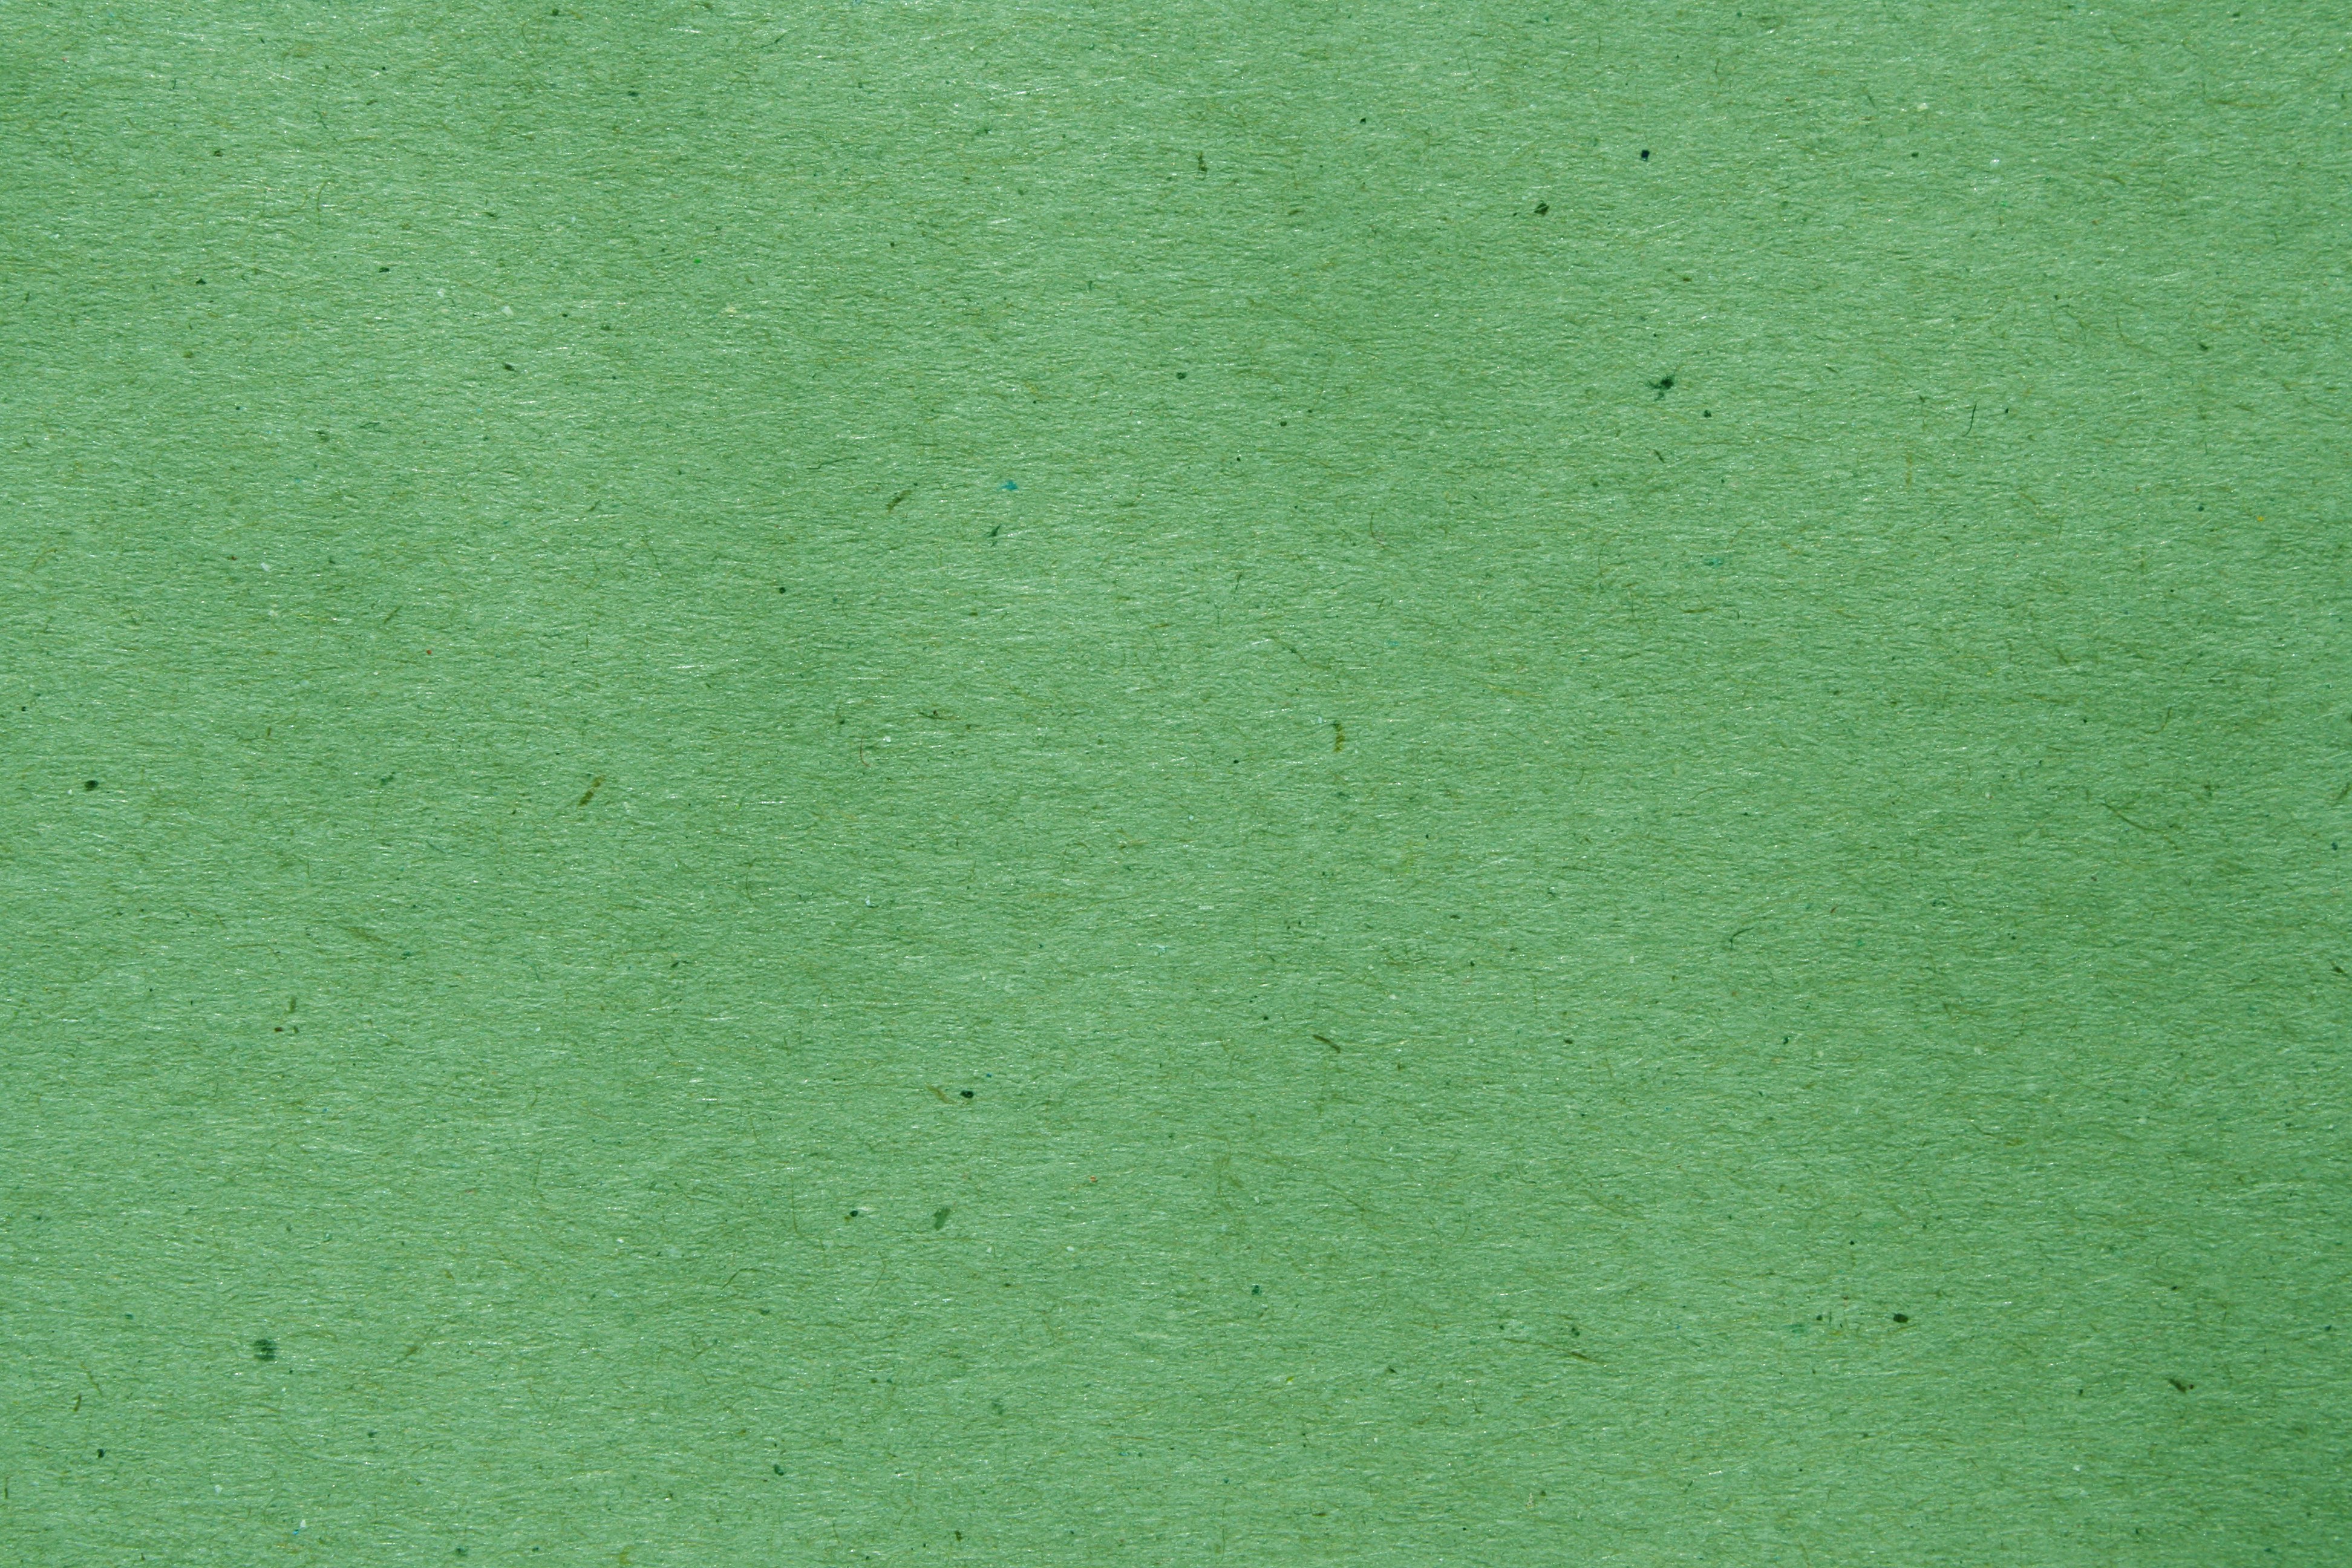 Background Green textured - Wisc-Online OER